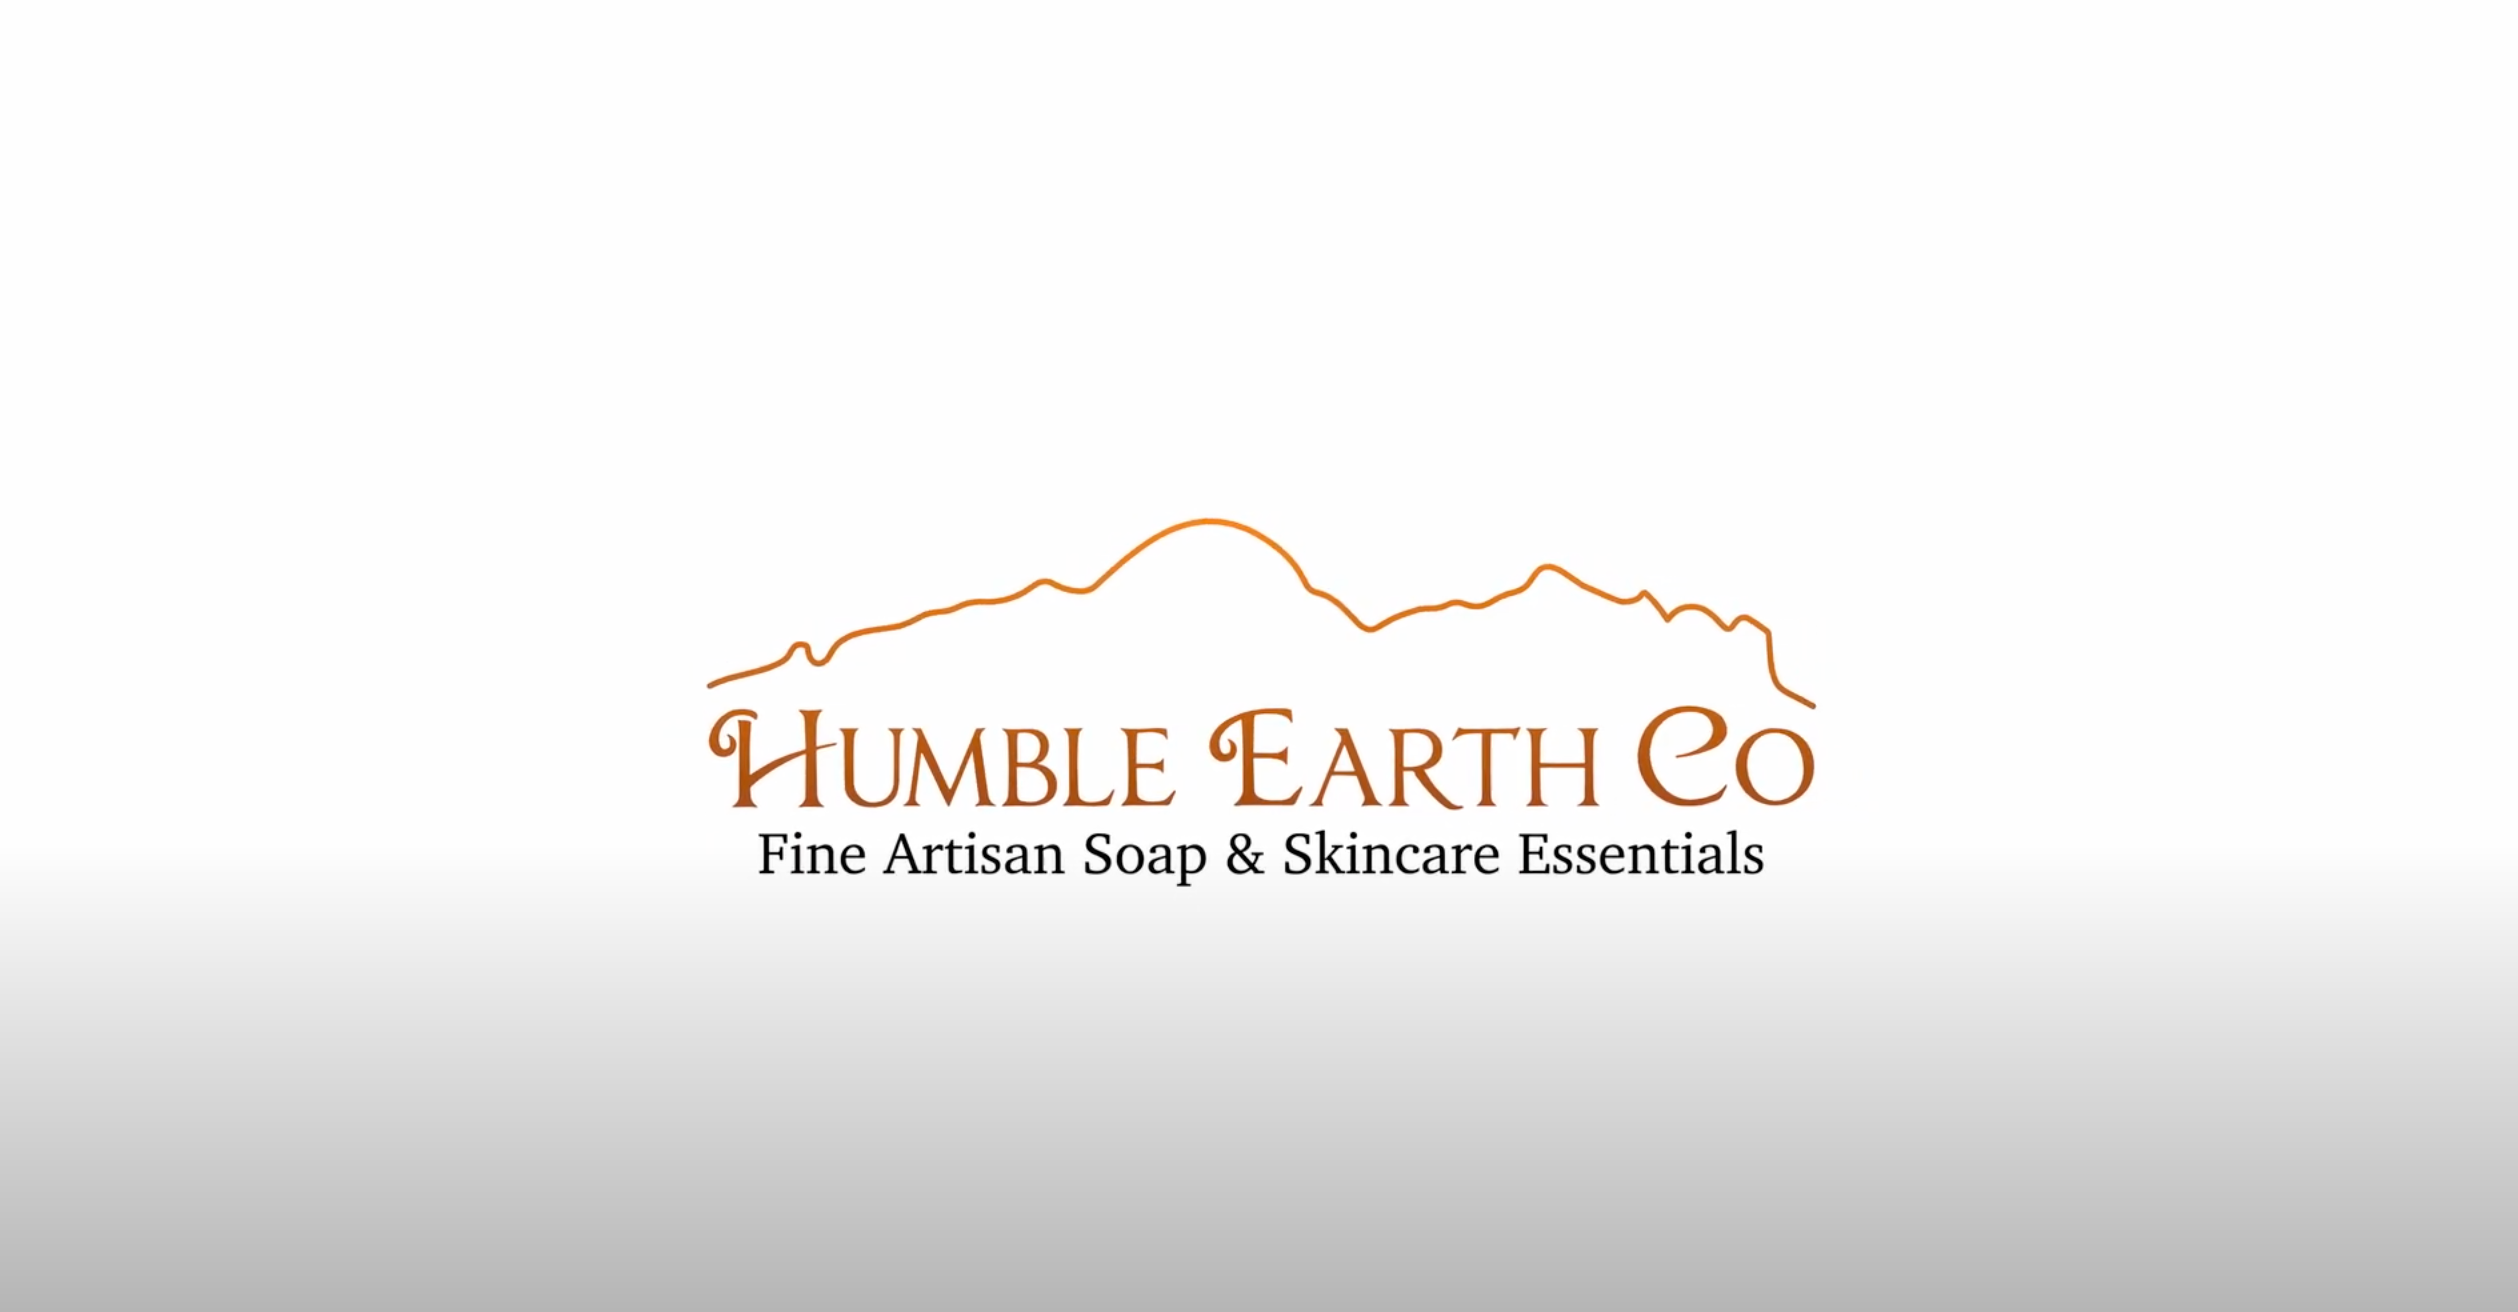 Charger la vidéo : Humble Earth Company Artisan Lotion de savon faite à la main en Arizona